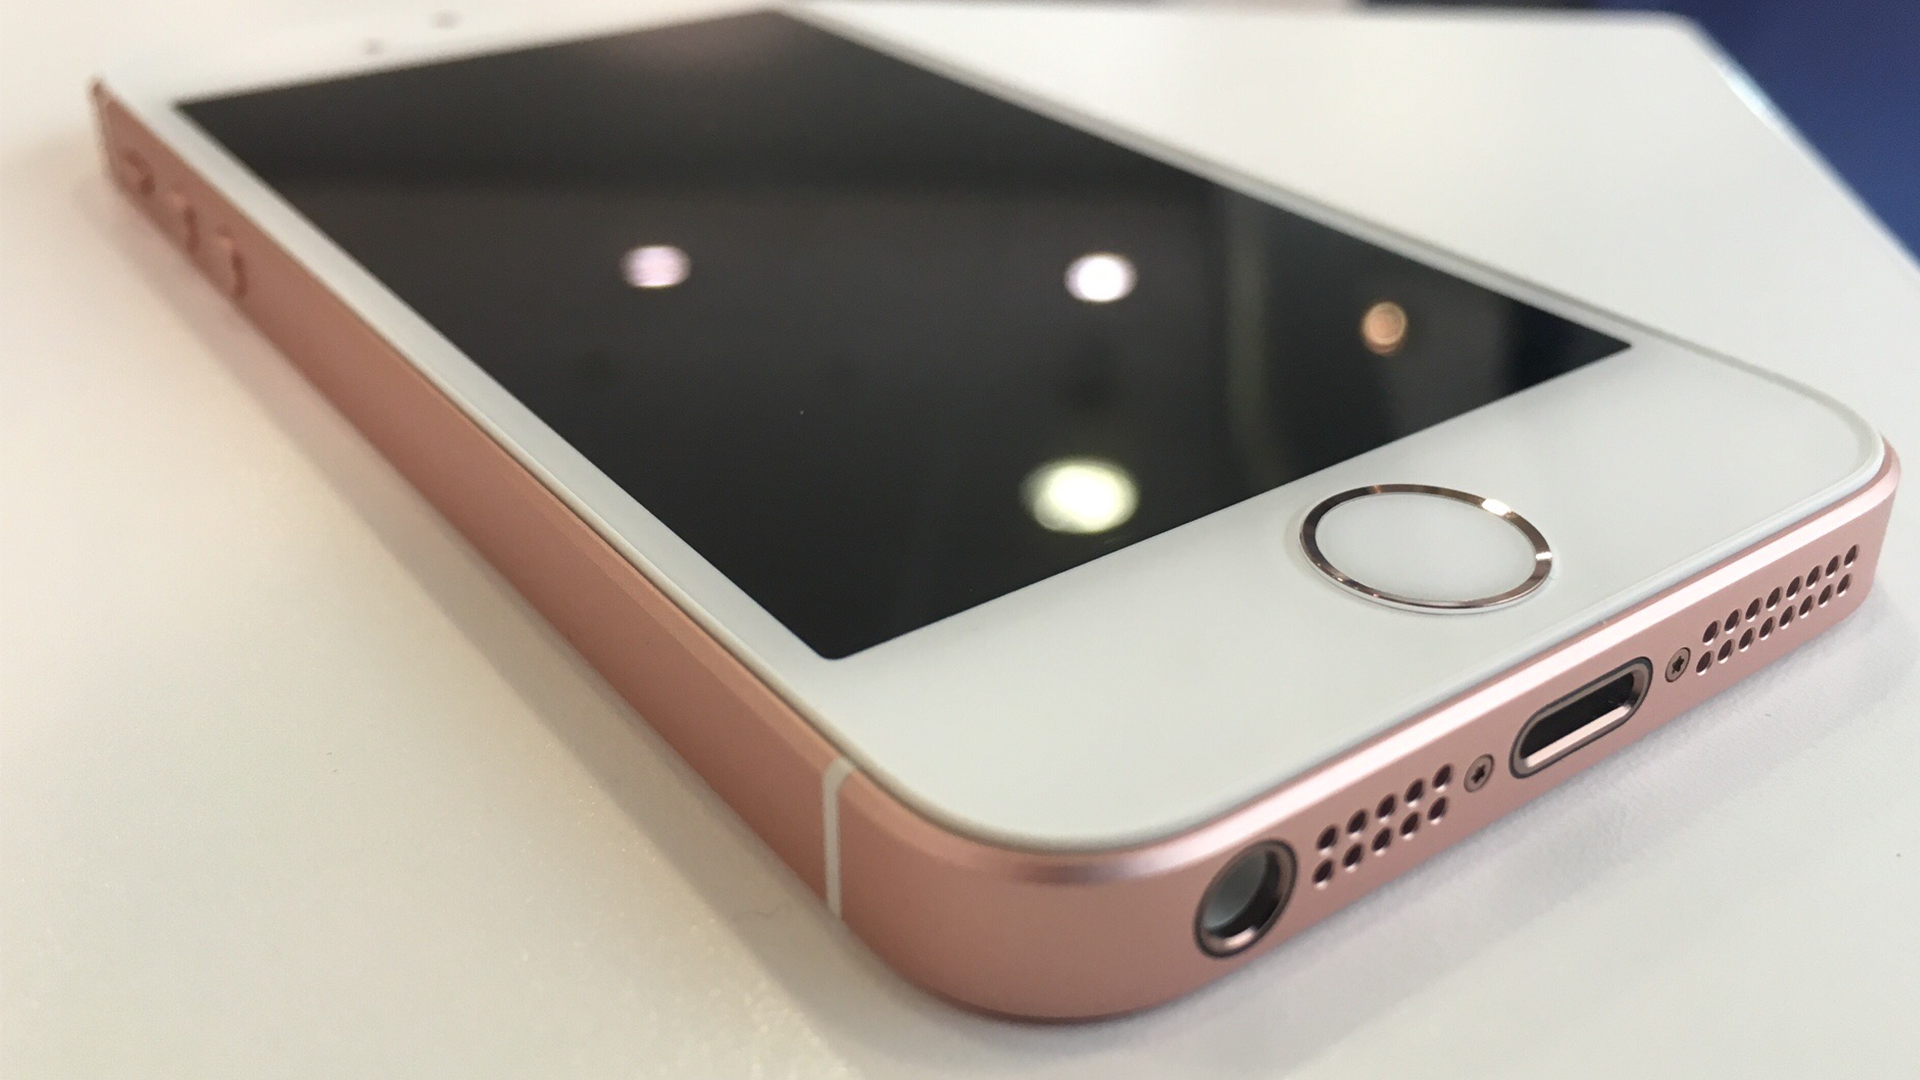 iPhone SE (2016) in Rose Gold